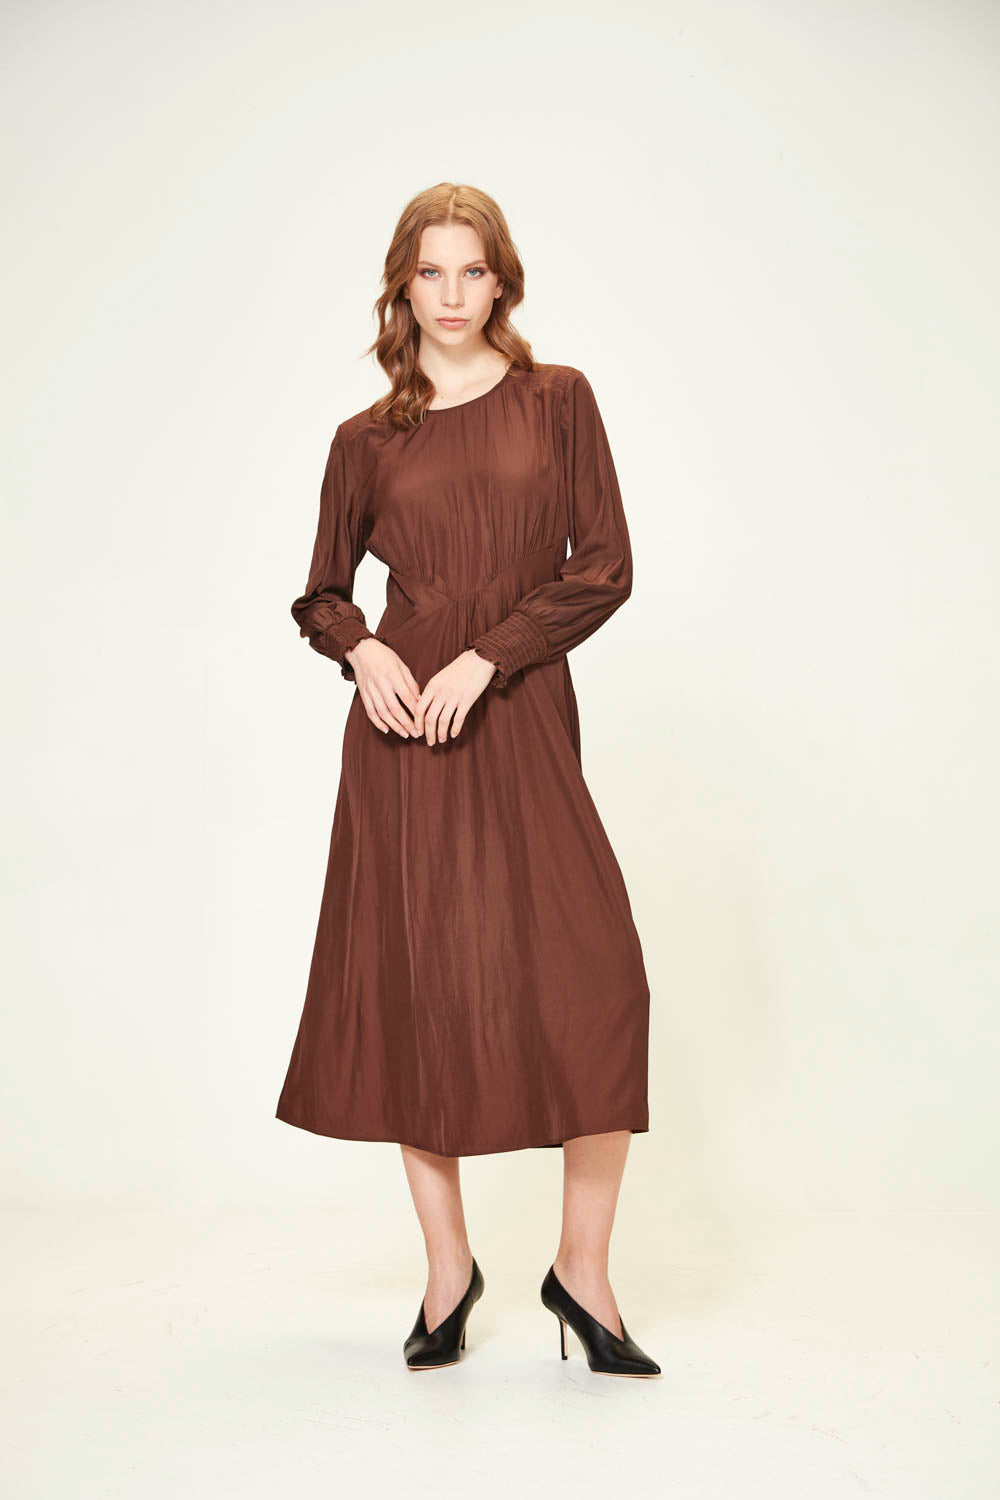 Glide by Verge - Harper Dress - Chocolate - Dress VERGE